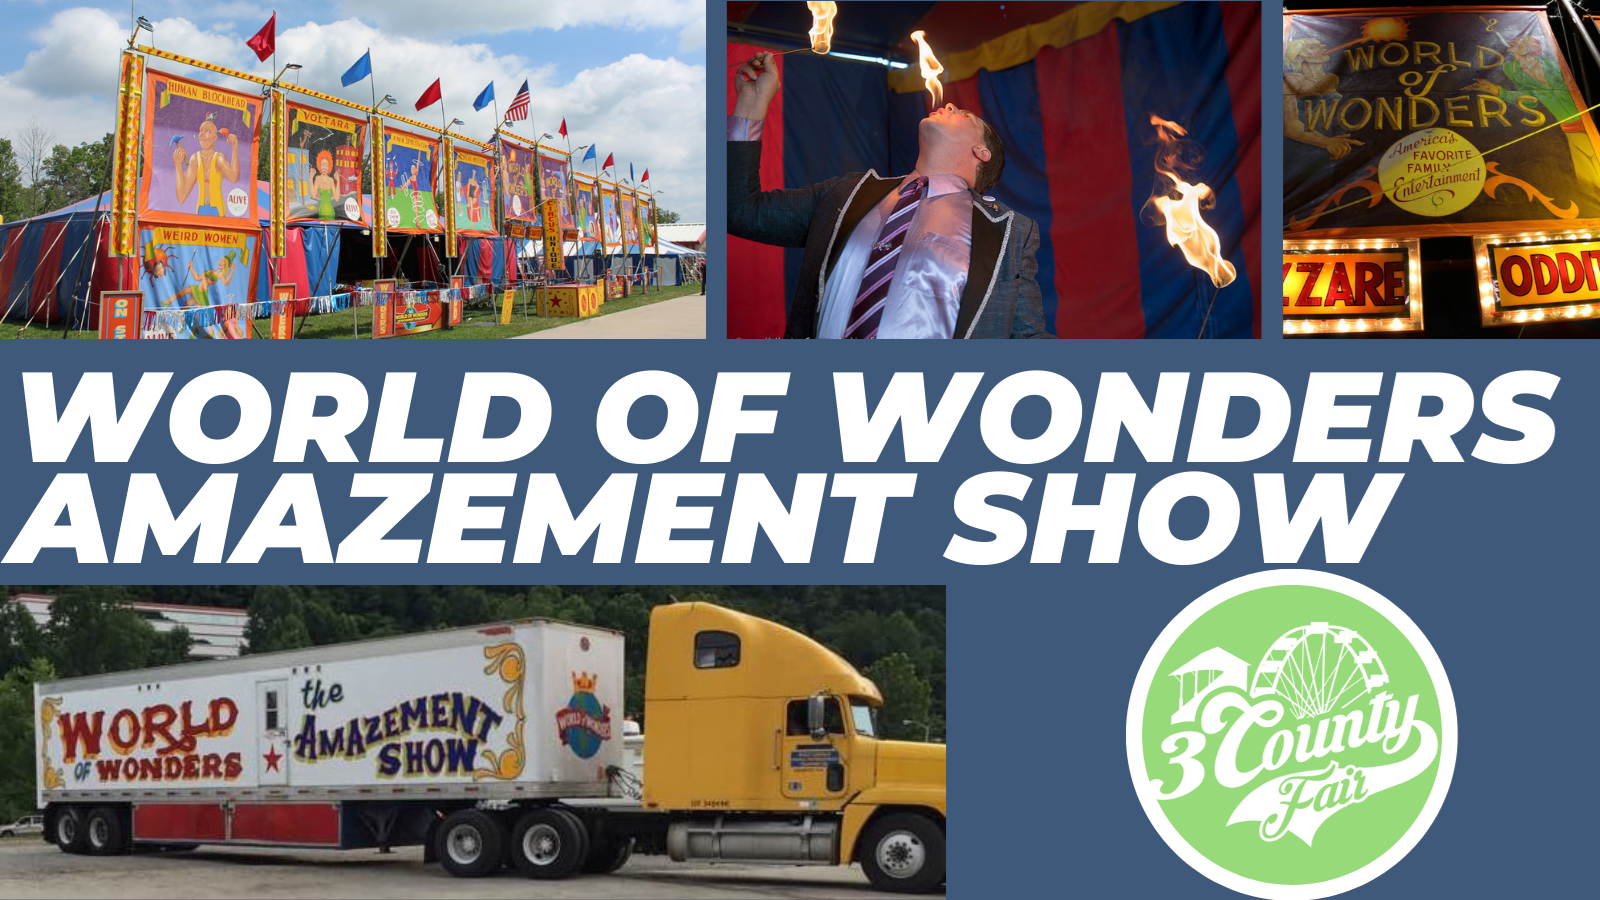 World of Wonders Amazement Show